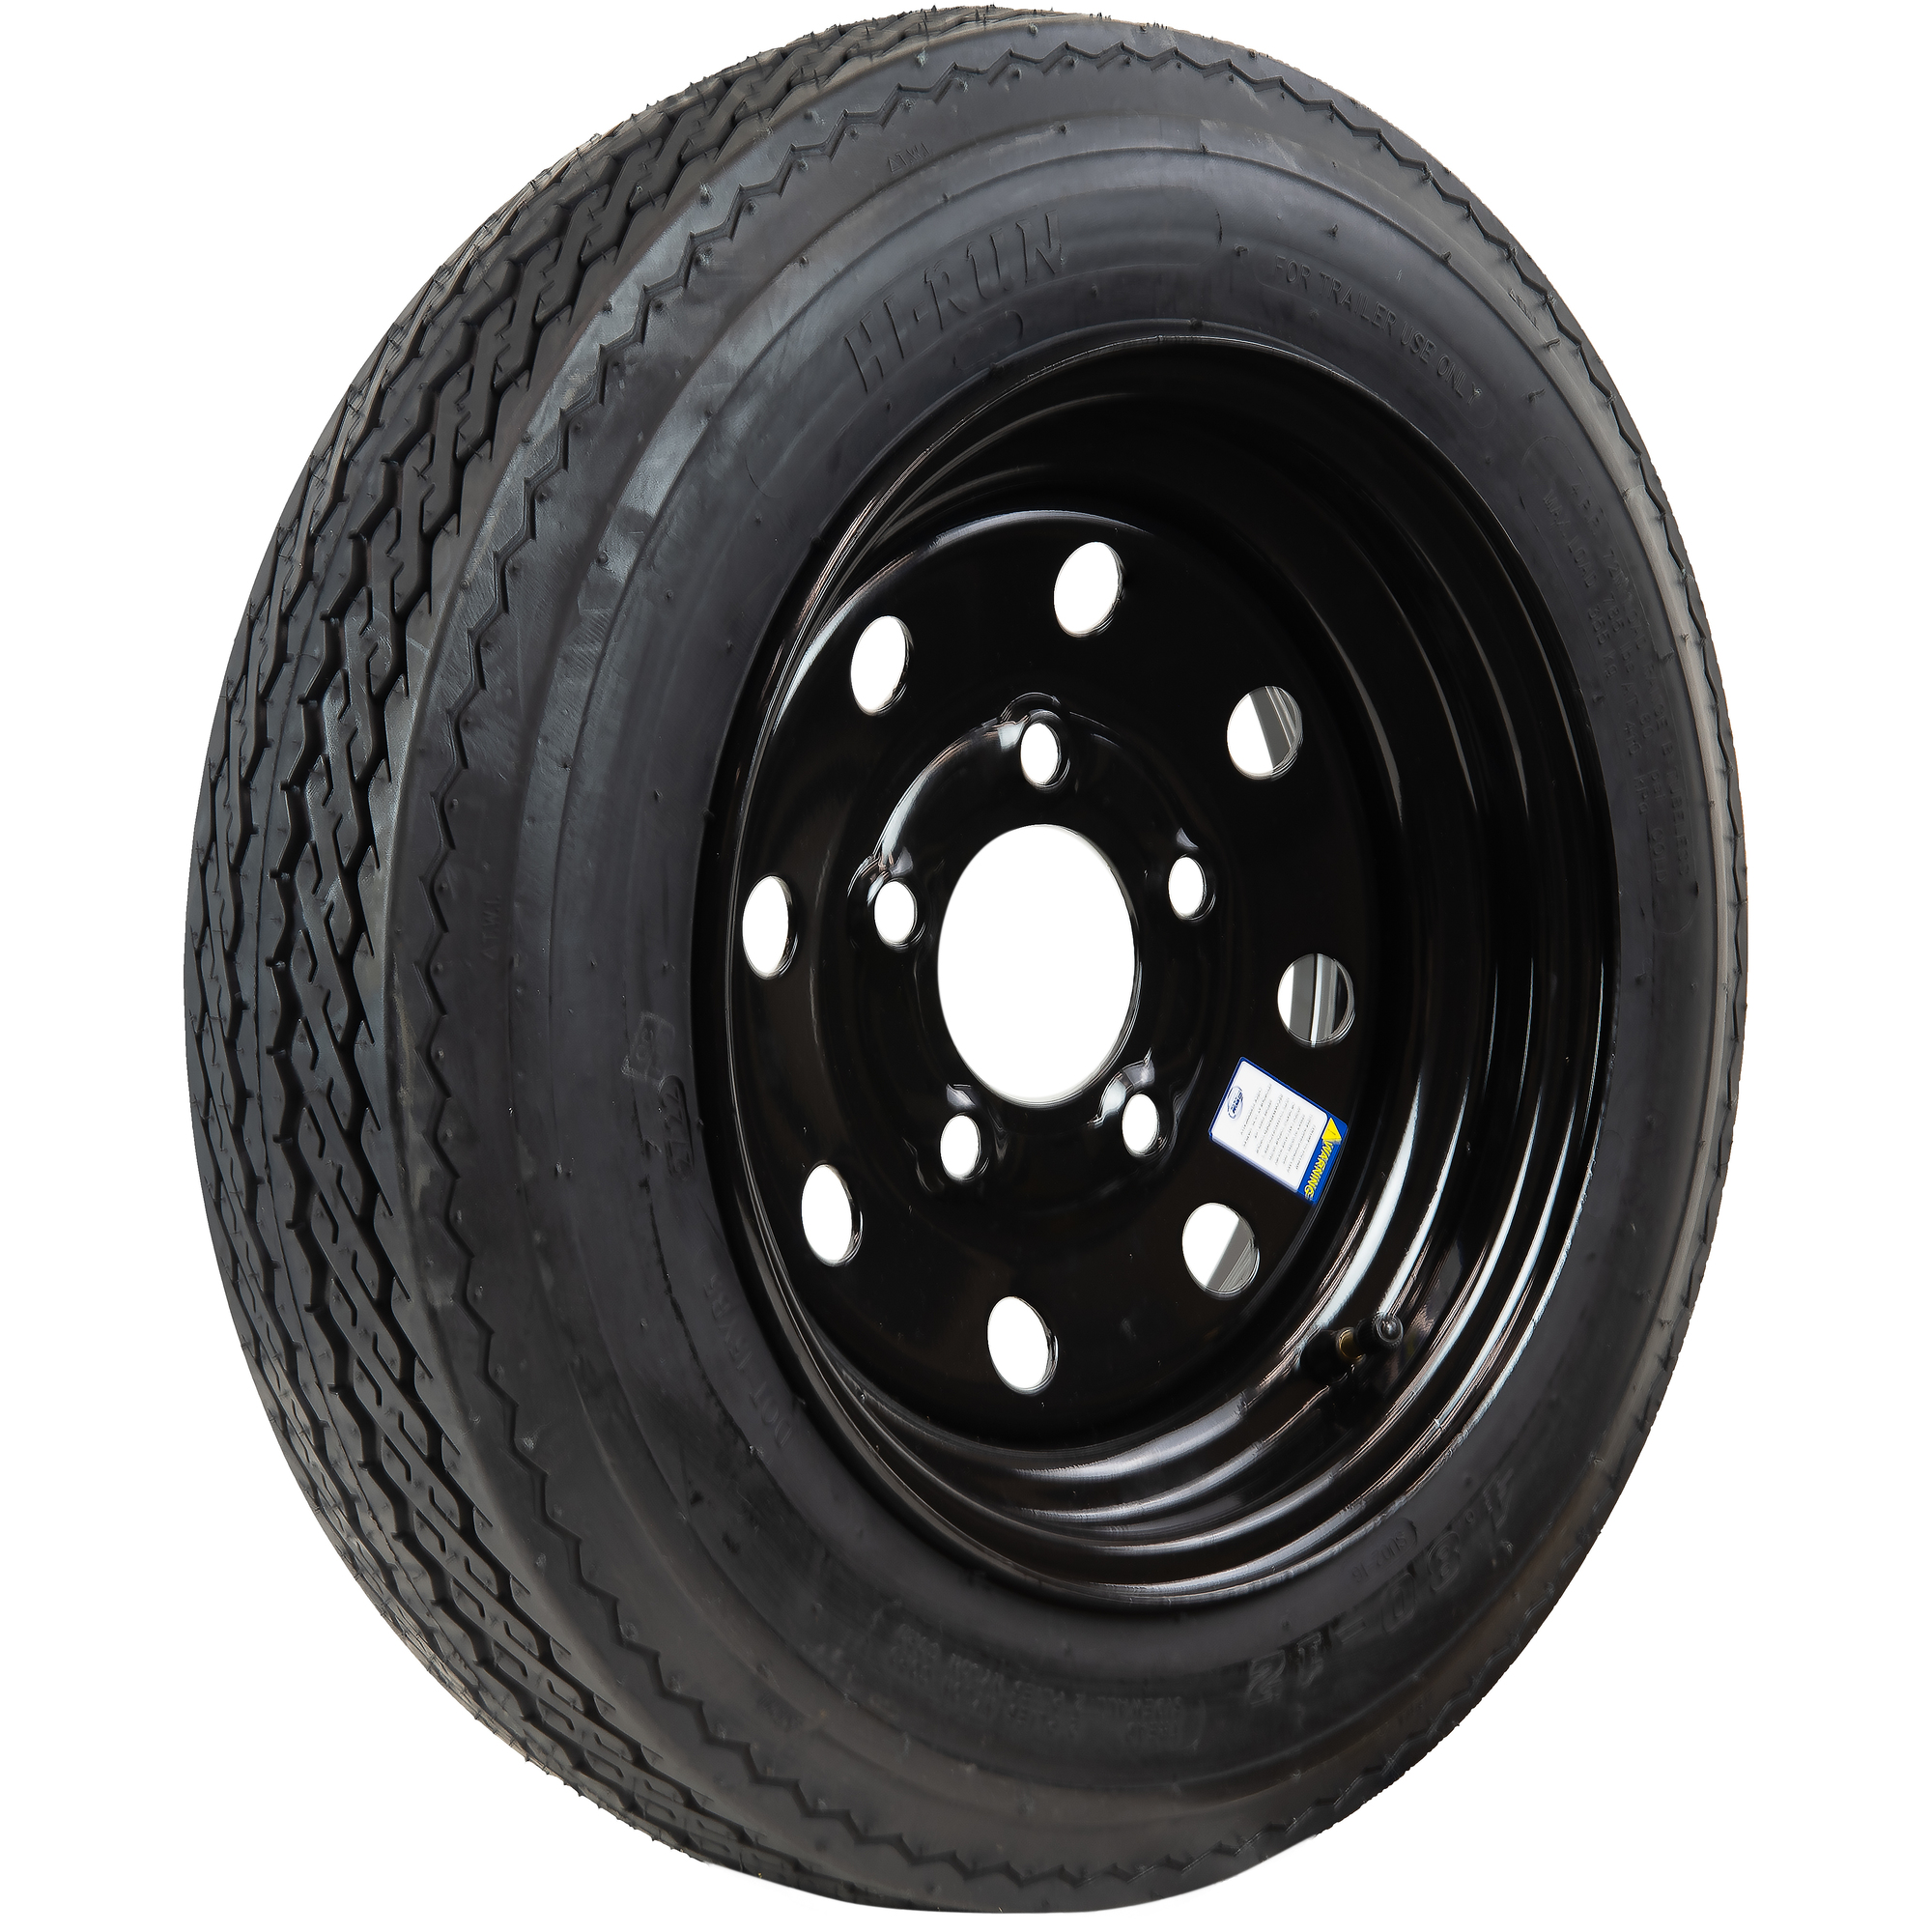 HI-RUN, Highway Trailer Tire Assembly, Bias Ply, Black Mod, Tire Size 4.80-12 Load Range Rating B, Bolt Holes (qty.) 5 Model ASB1211